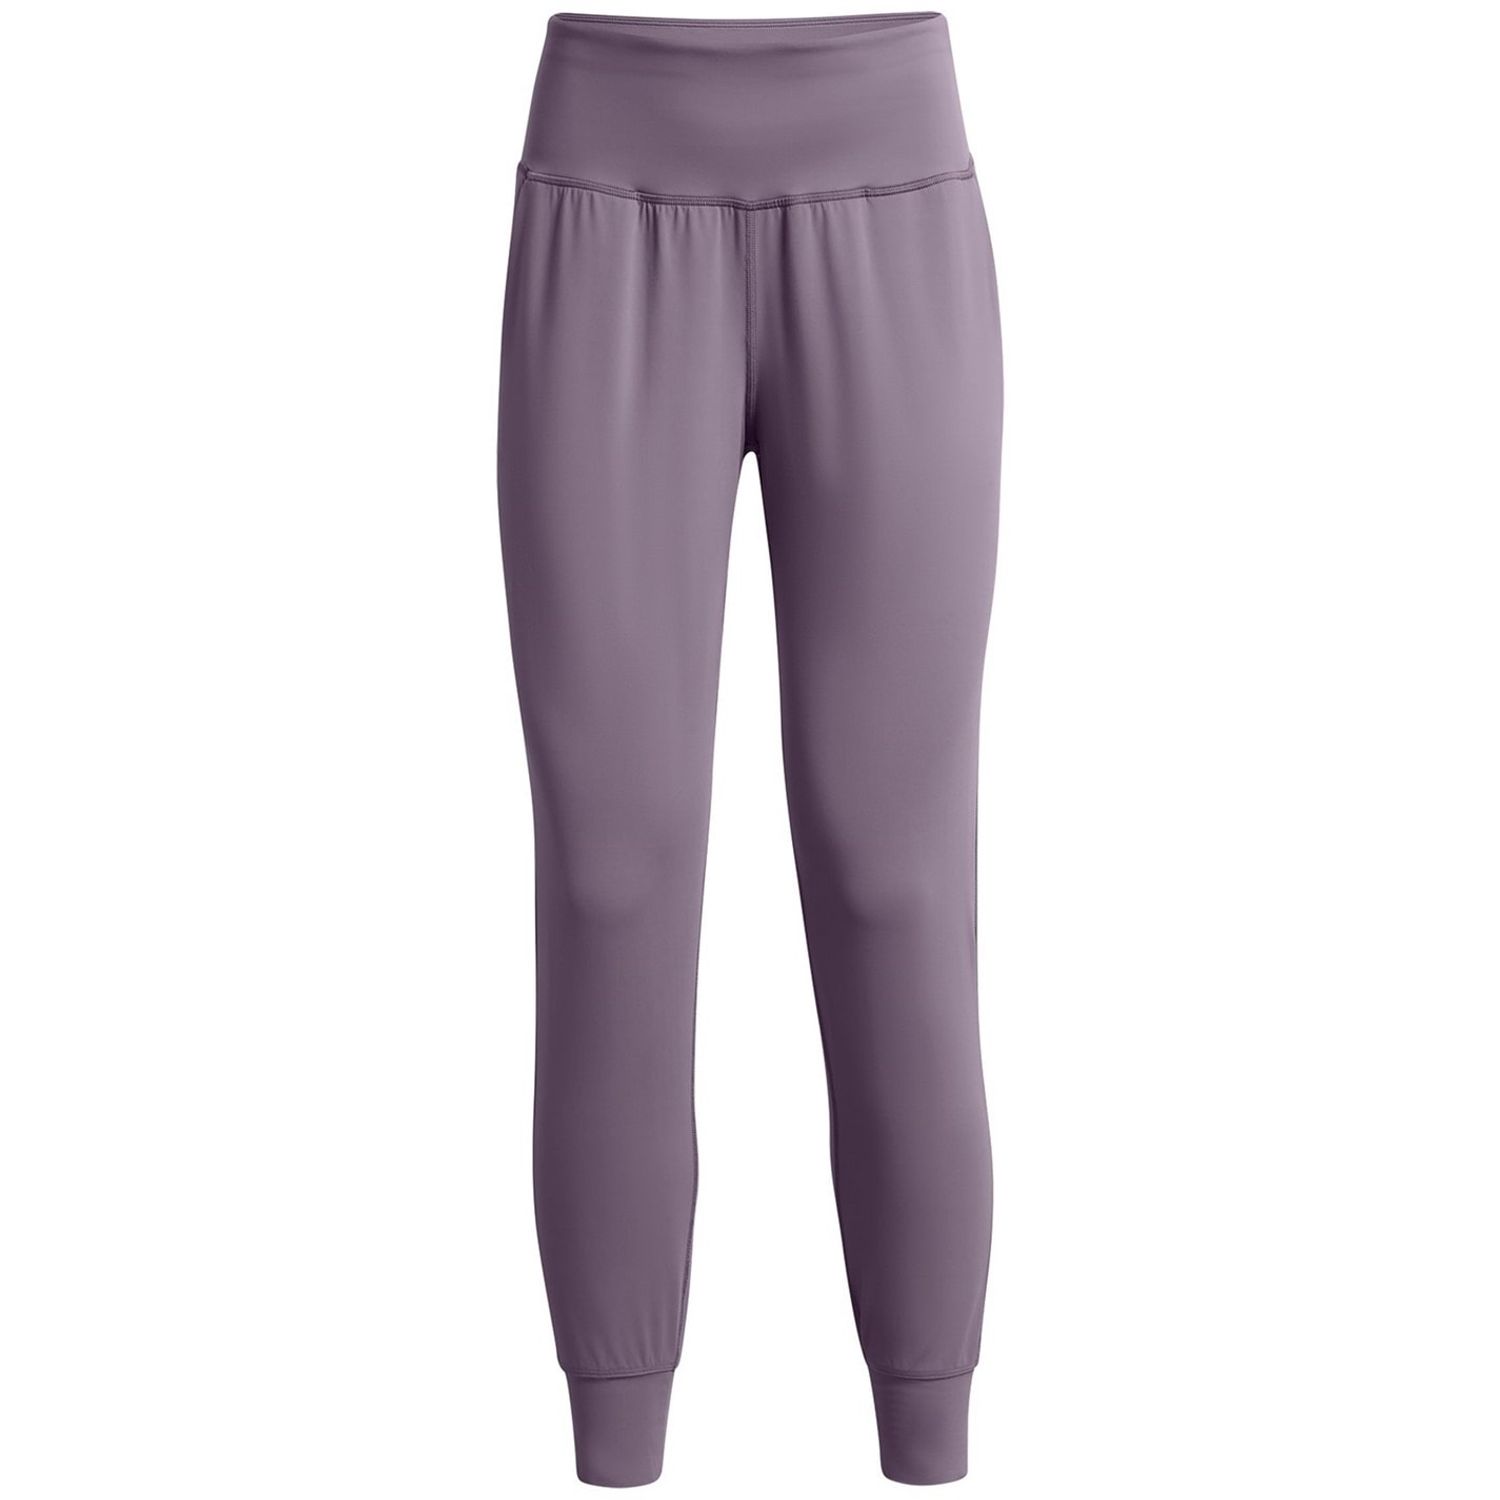 Under Armour Purple Athletic Pants for Women